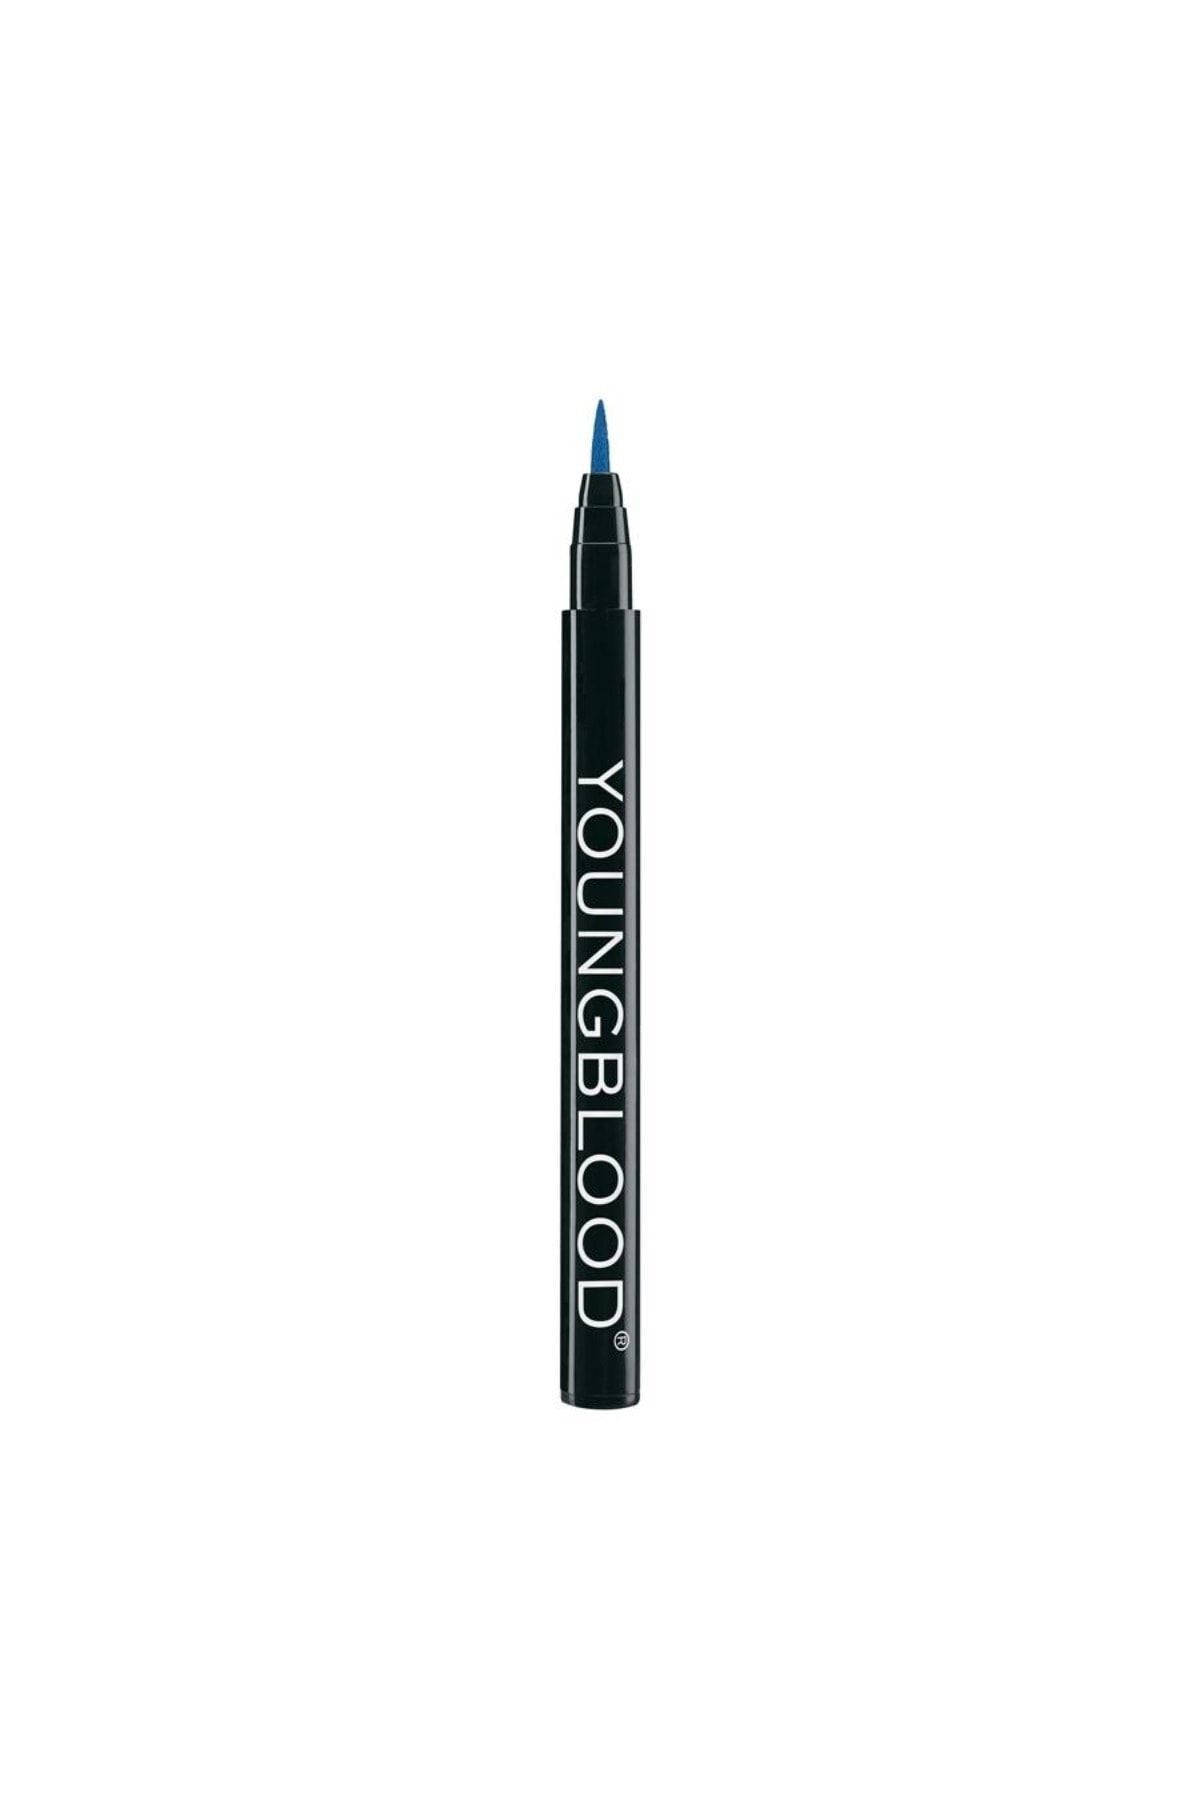 Youngblood Youngblood Eye Mazing Liquid Liner Pen Azul 0.59 ml